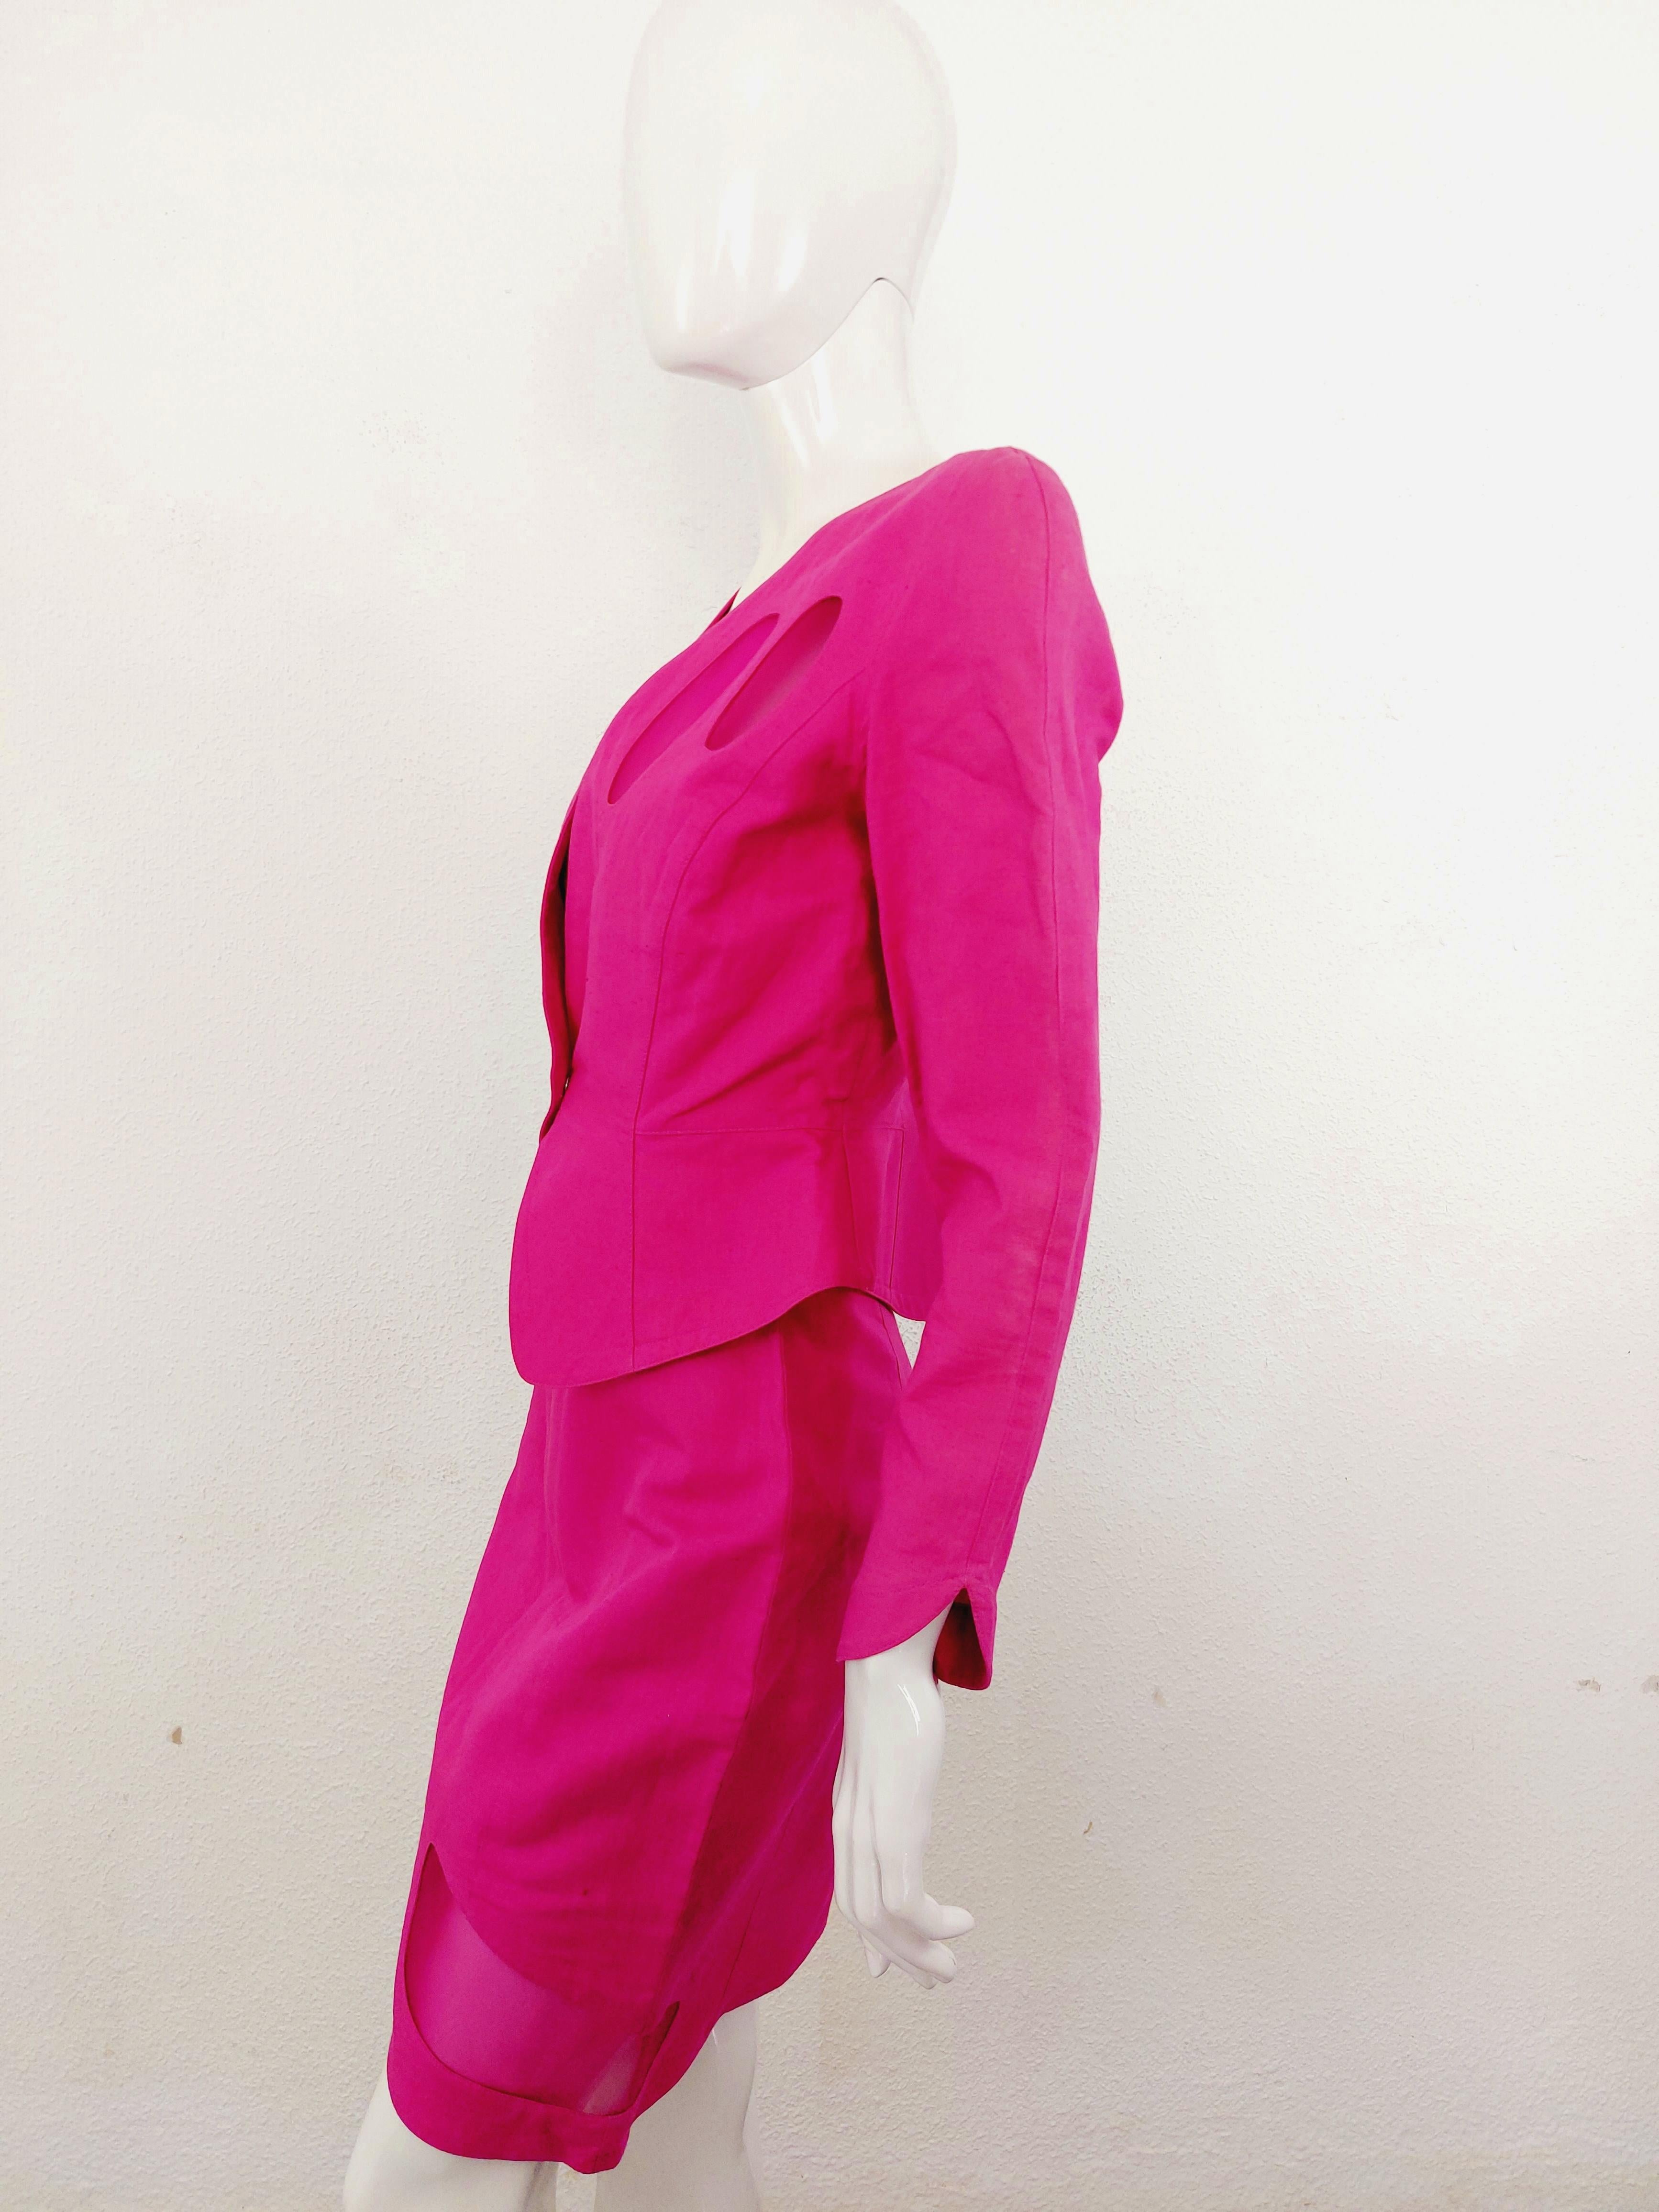 Thierry Mugler 1980s Pink Sculptural Hourglass Cutout Transparent Skirt Suit Set 6